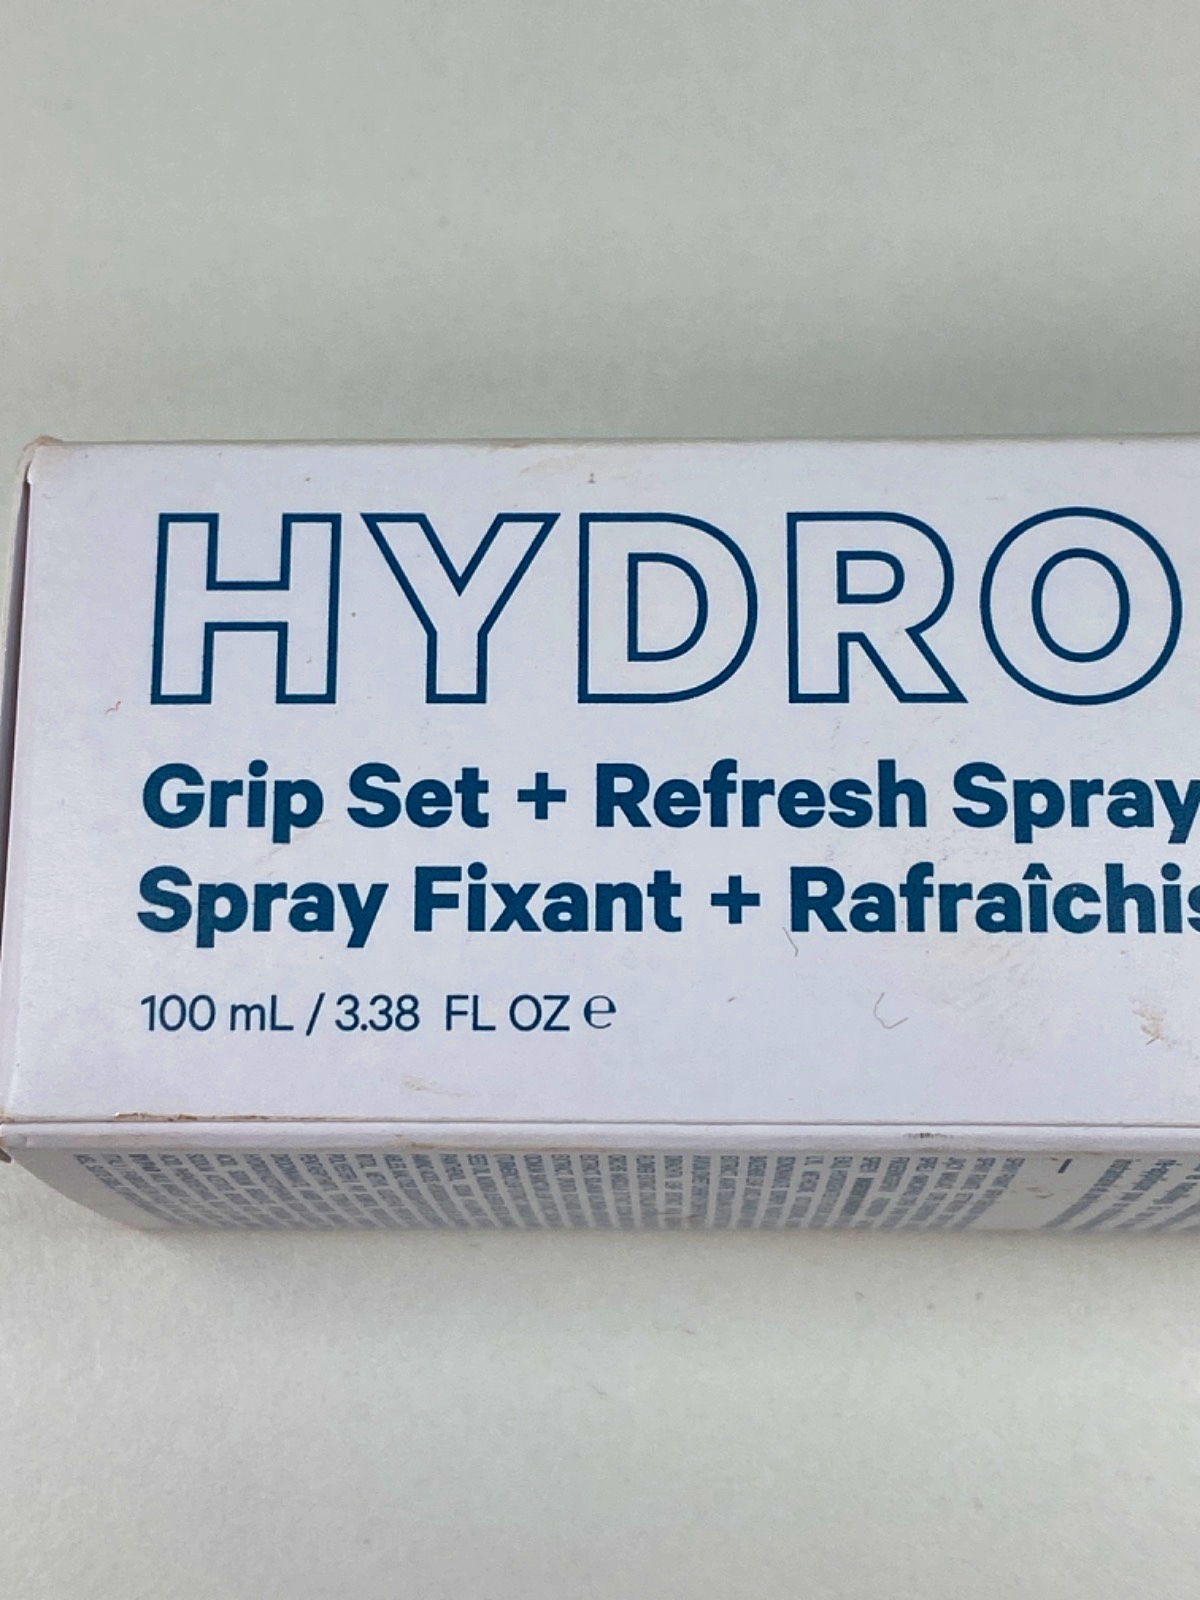 Milk Makeup Hydro Grip Set + Refresh Spray 100ml